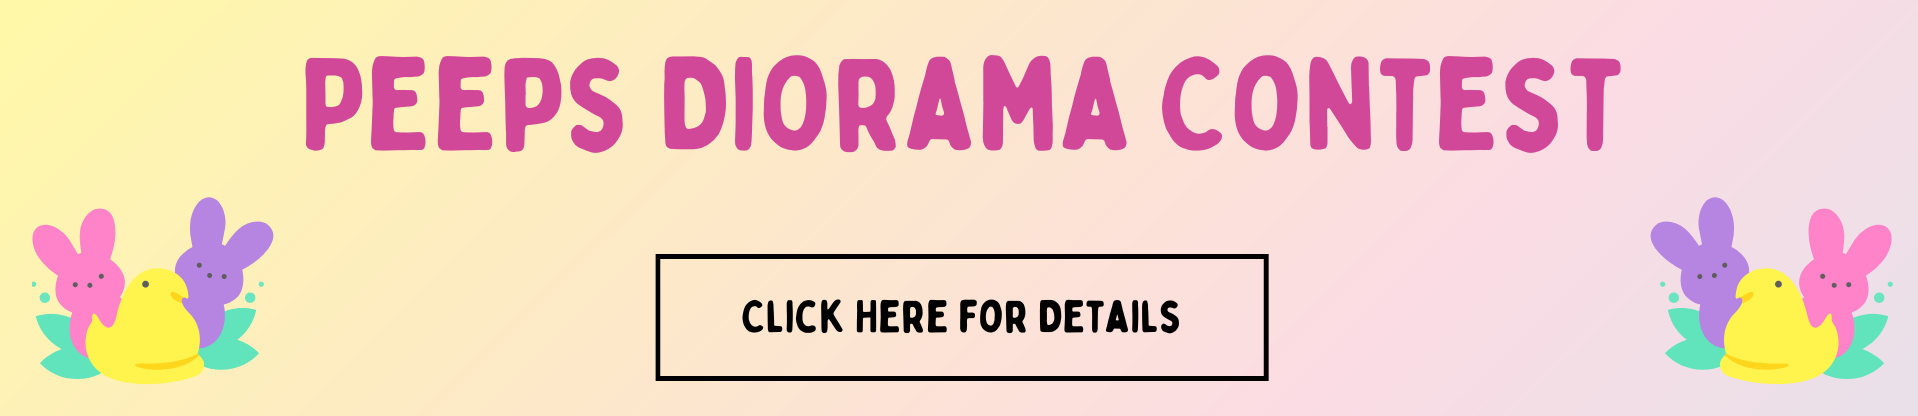 Peeps Diorama Contest Banner